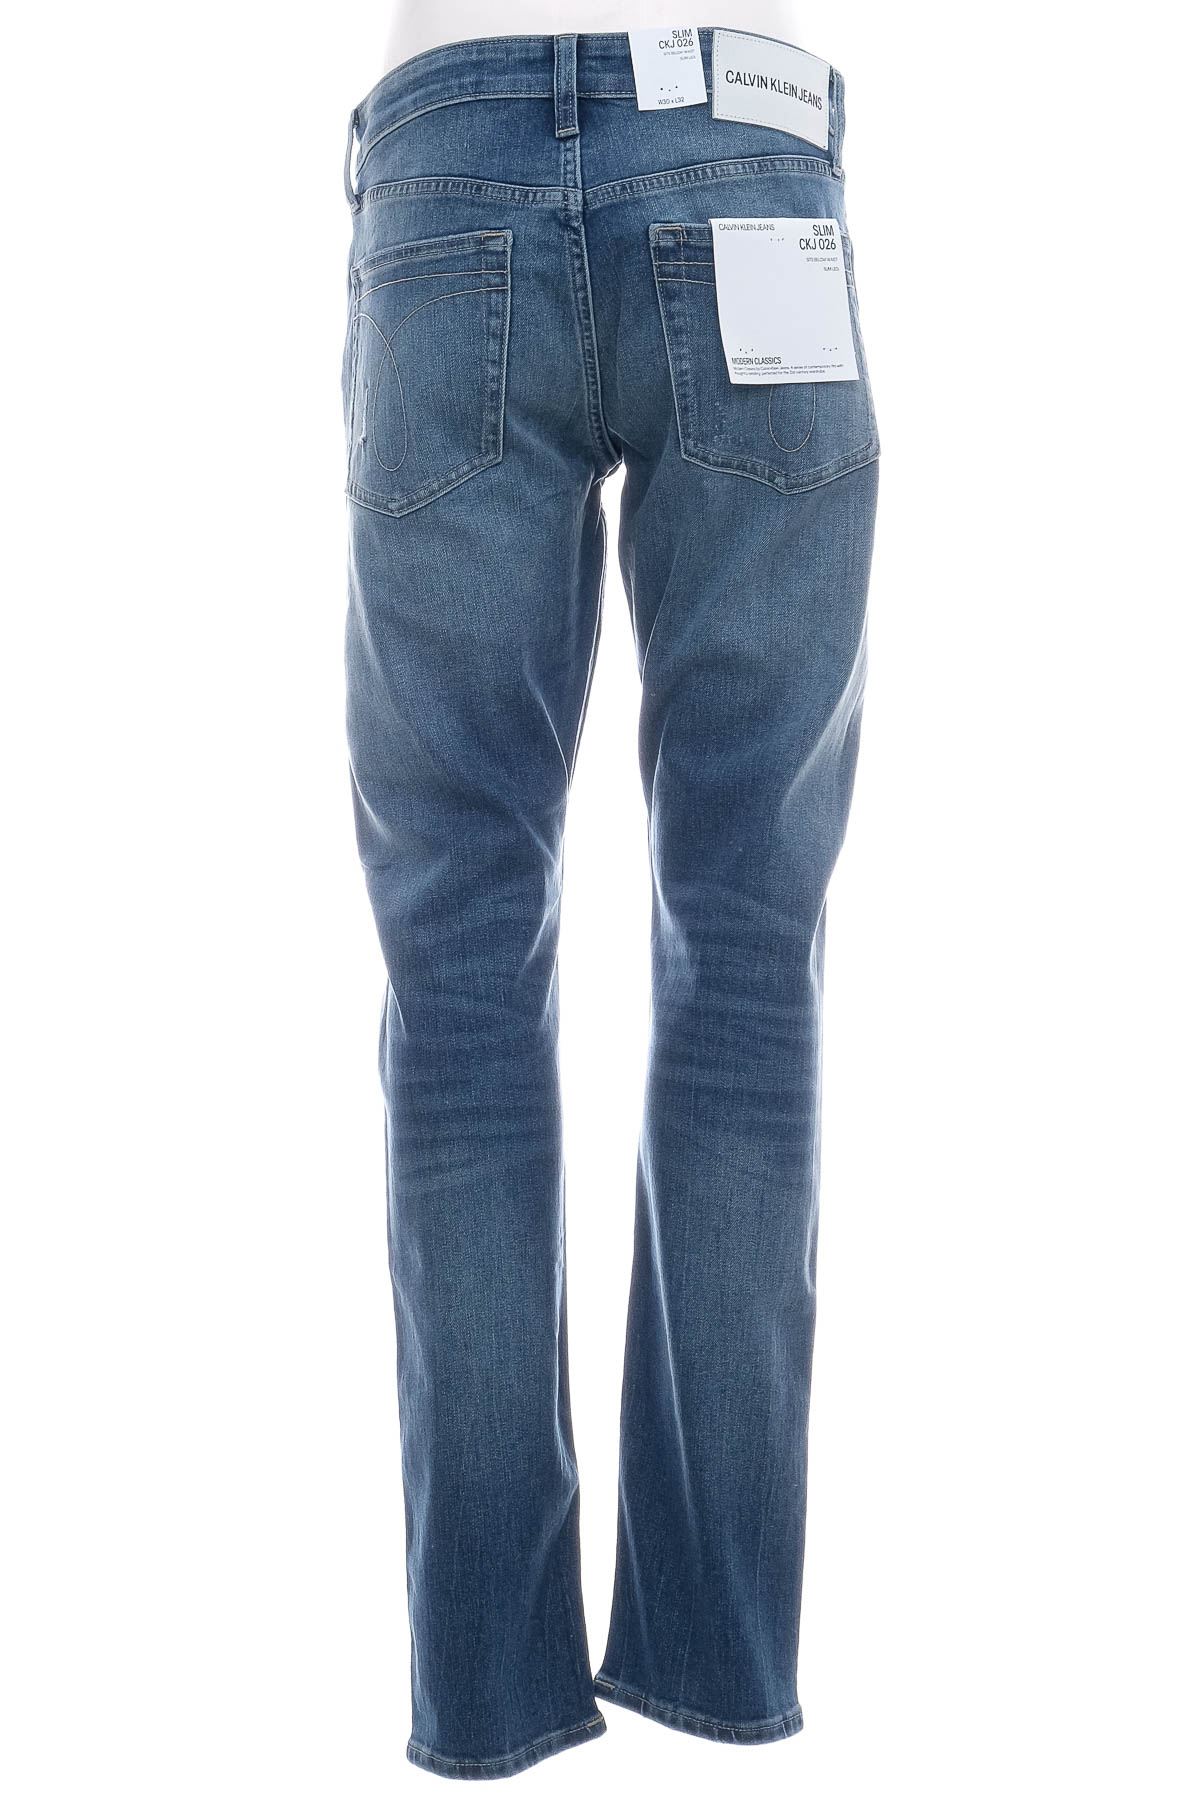 Men's jeans - Calvin Klein Jeans - 1